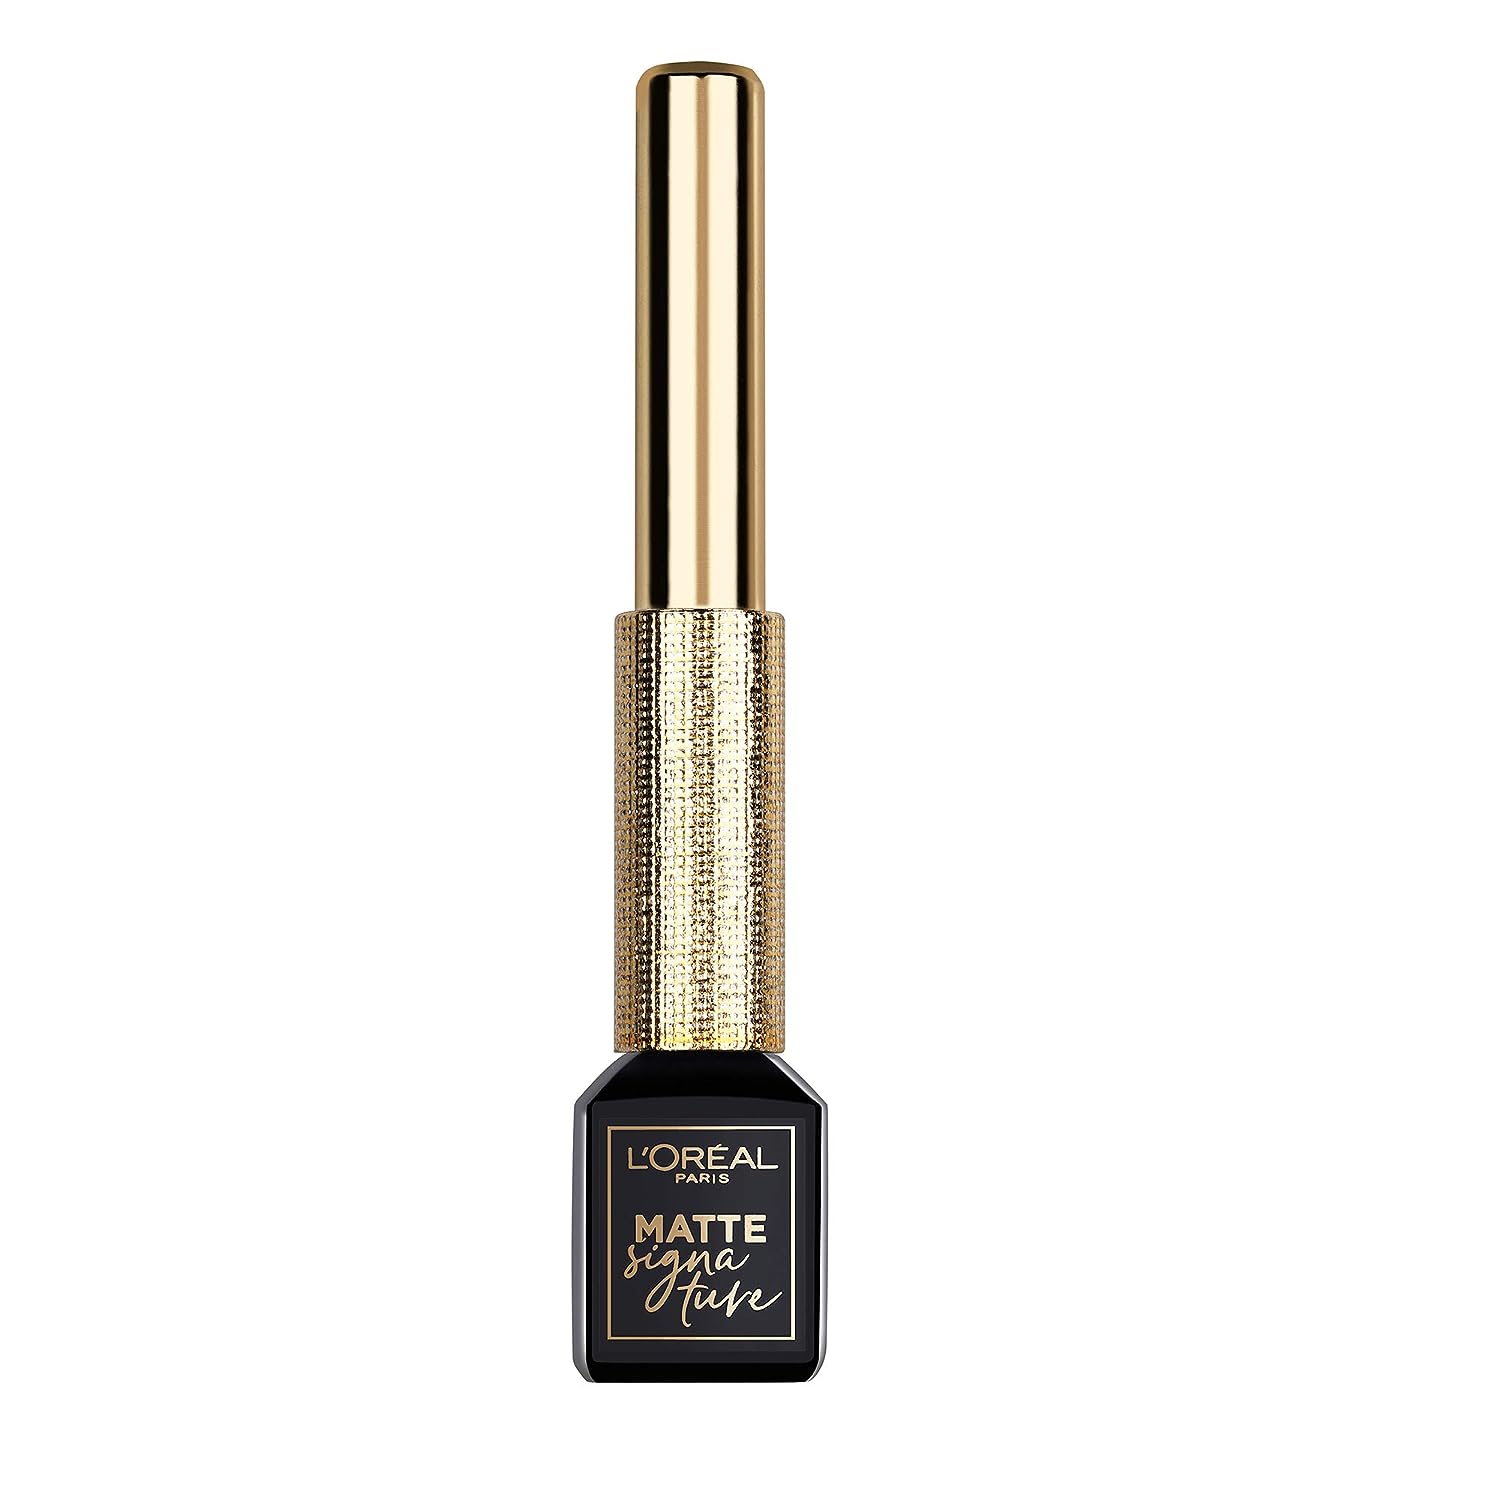 L'Oreal Paris Makeup Matte Signature Liquid Dip Eyeliner, Waterproof, Precise and Easy Application, All Day Wear, Vivid Matte Finish, Black, 0.07 ;